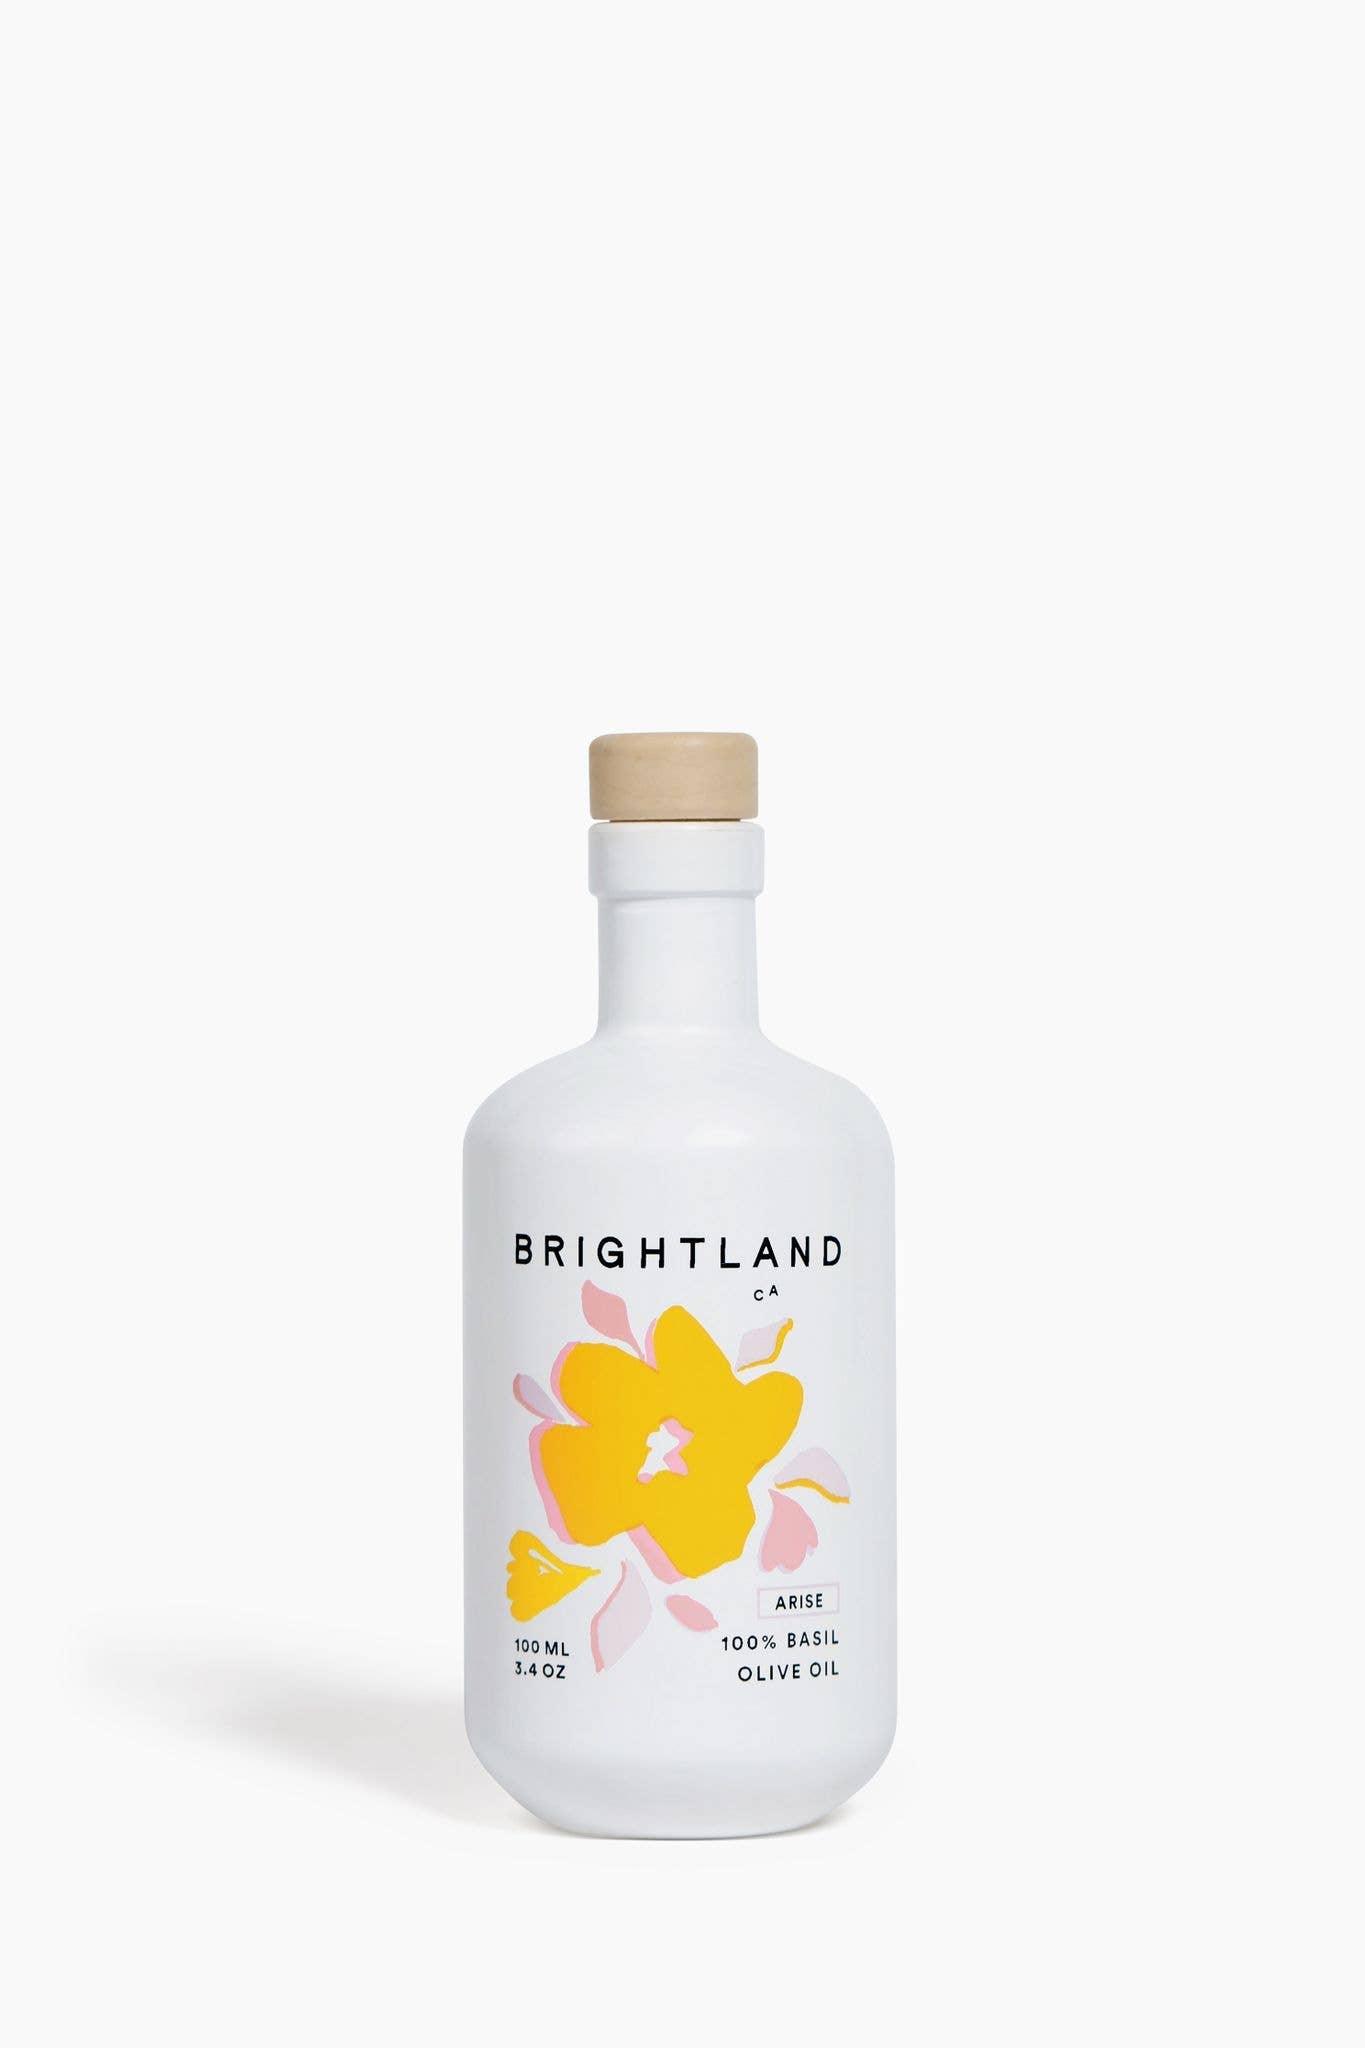 Mini ARISE Olive Oil by Brightland